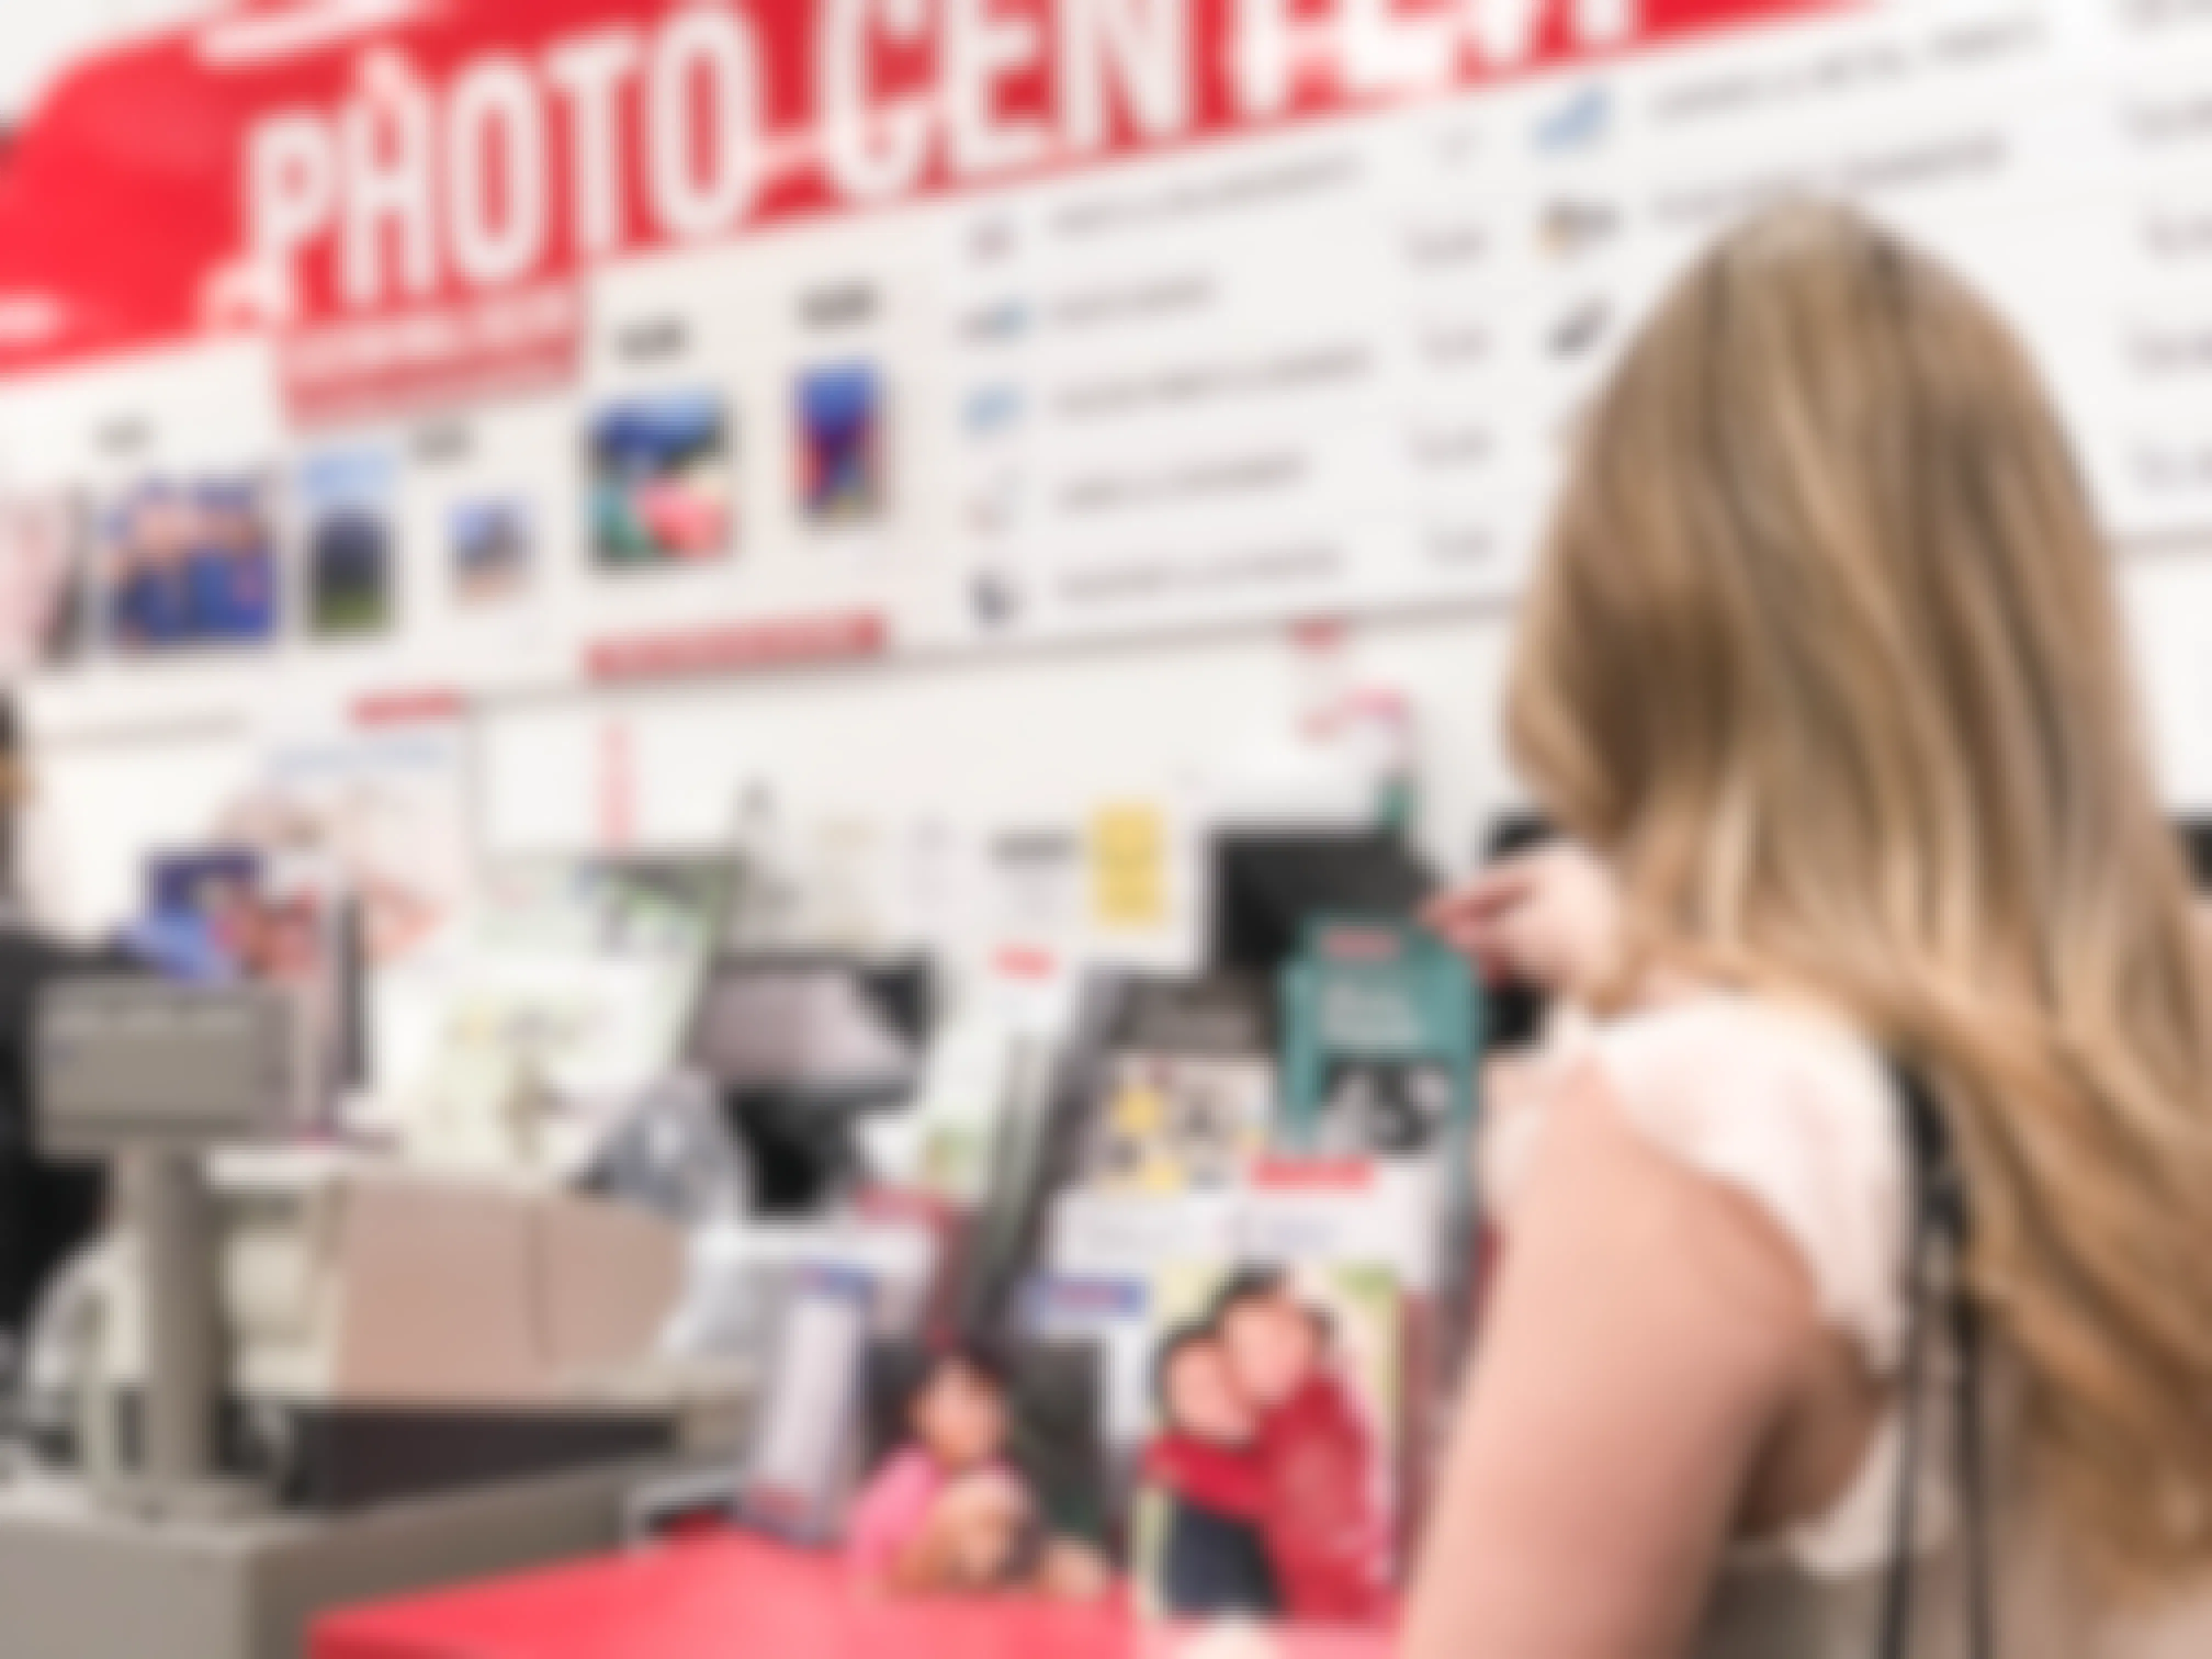 Costco Photo Centers Are Closing Forever